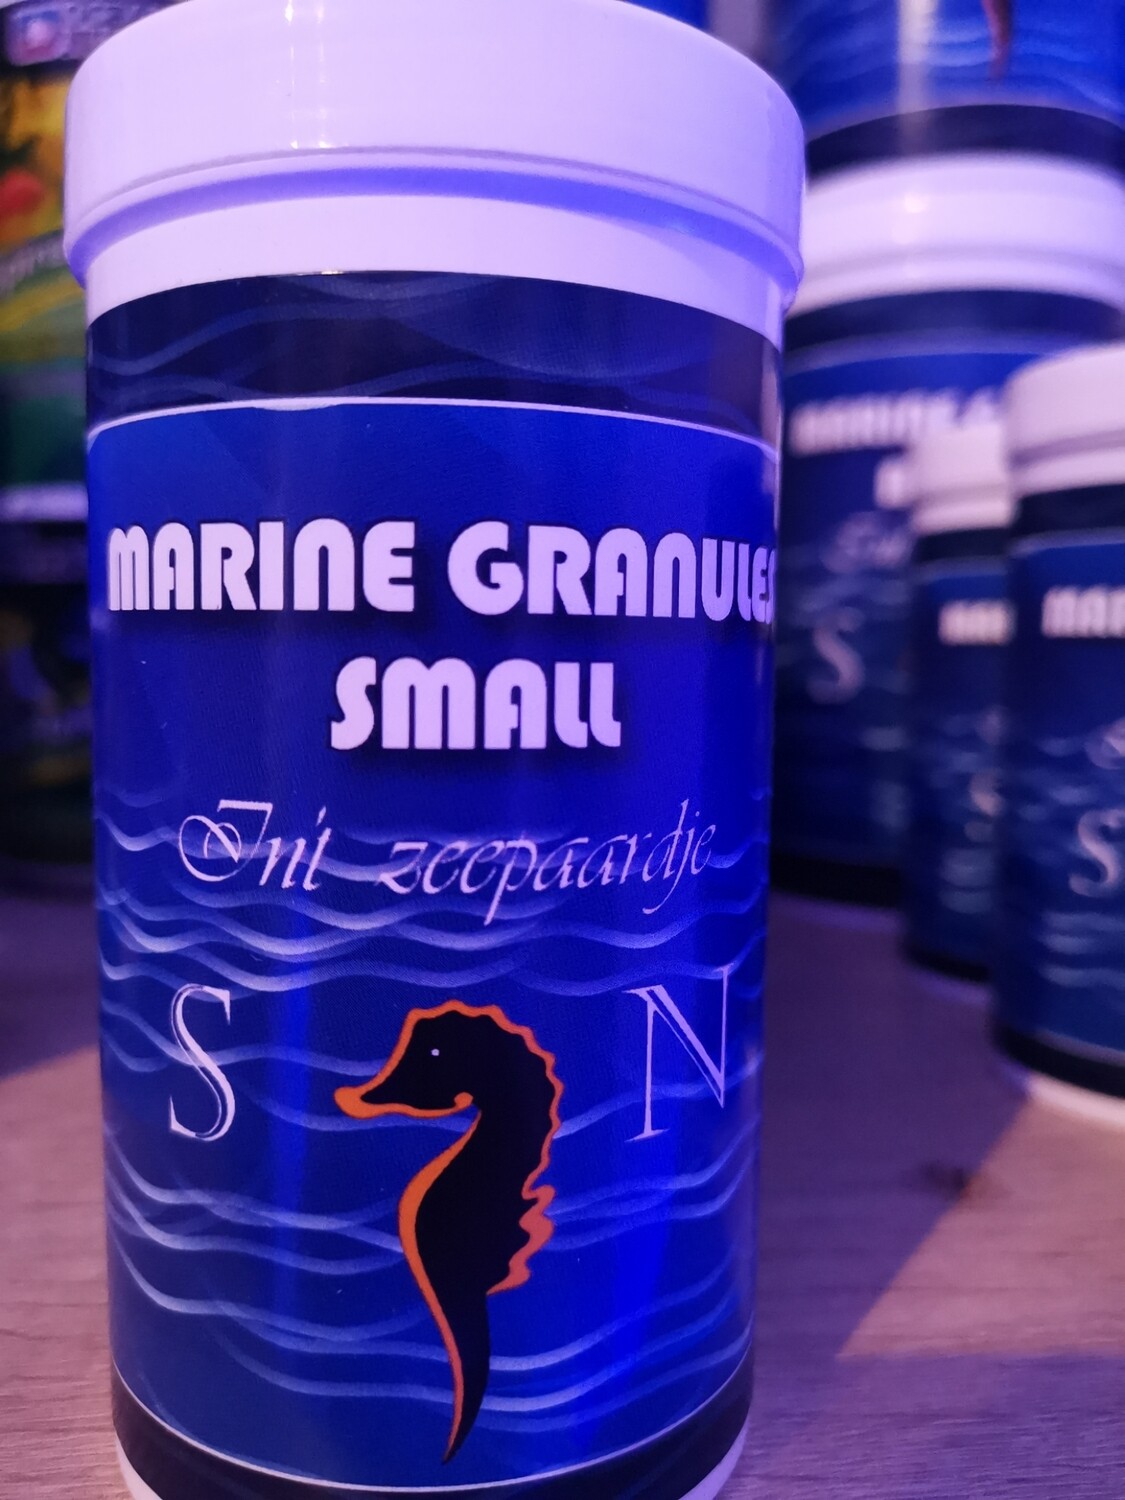 Marine granules small